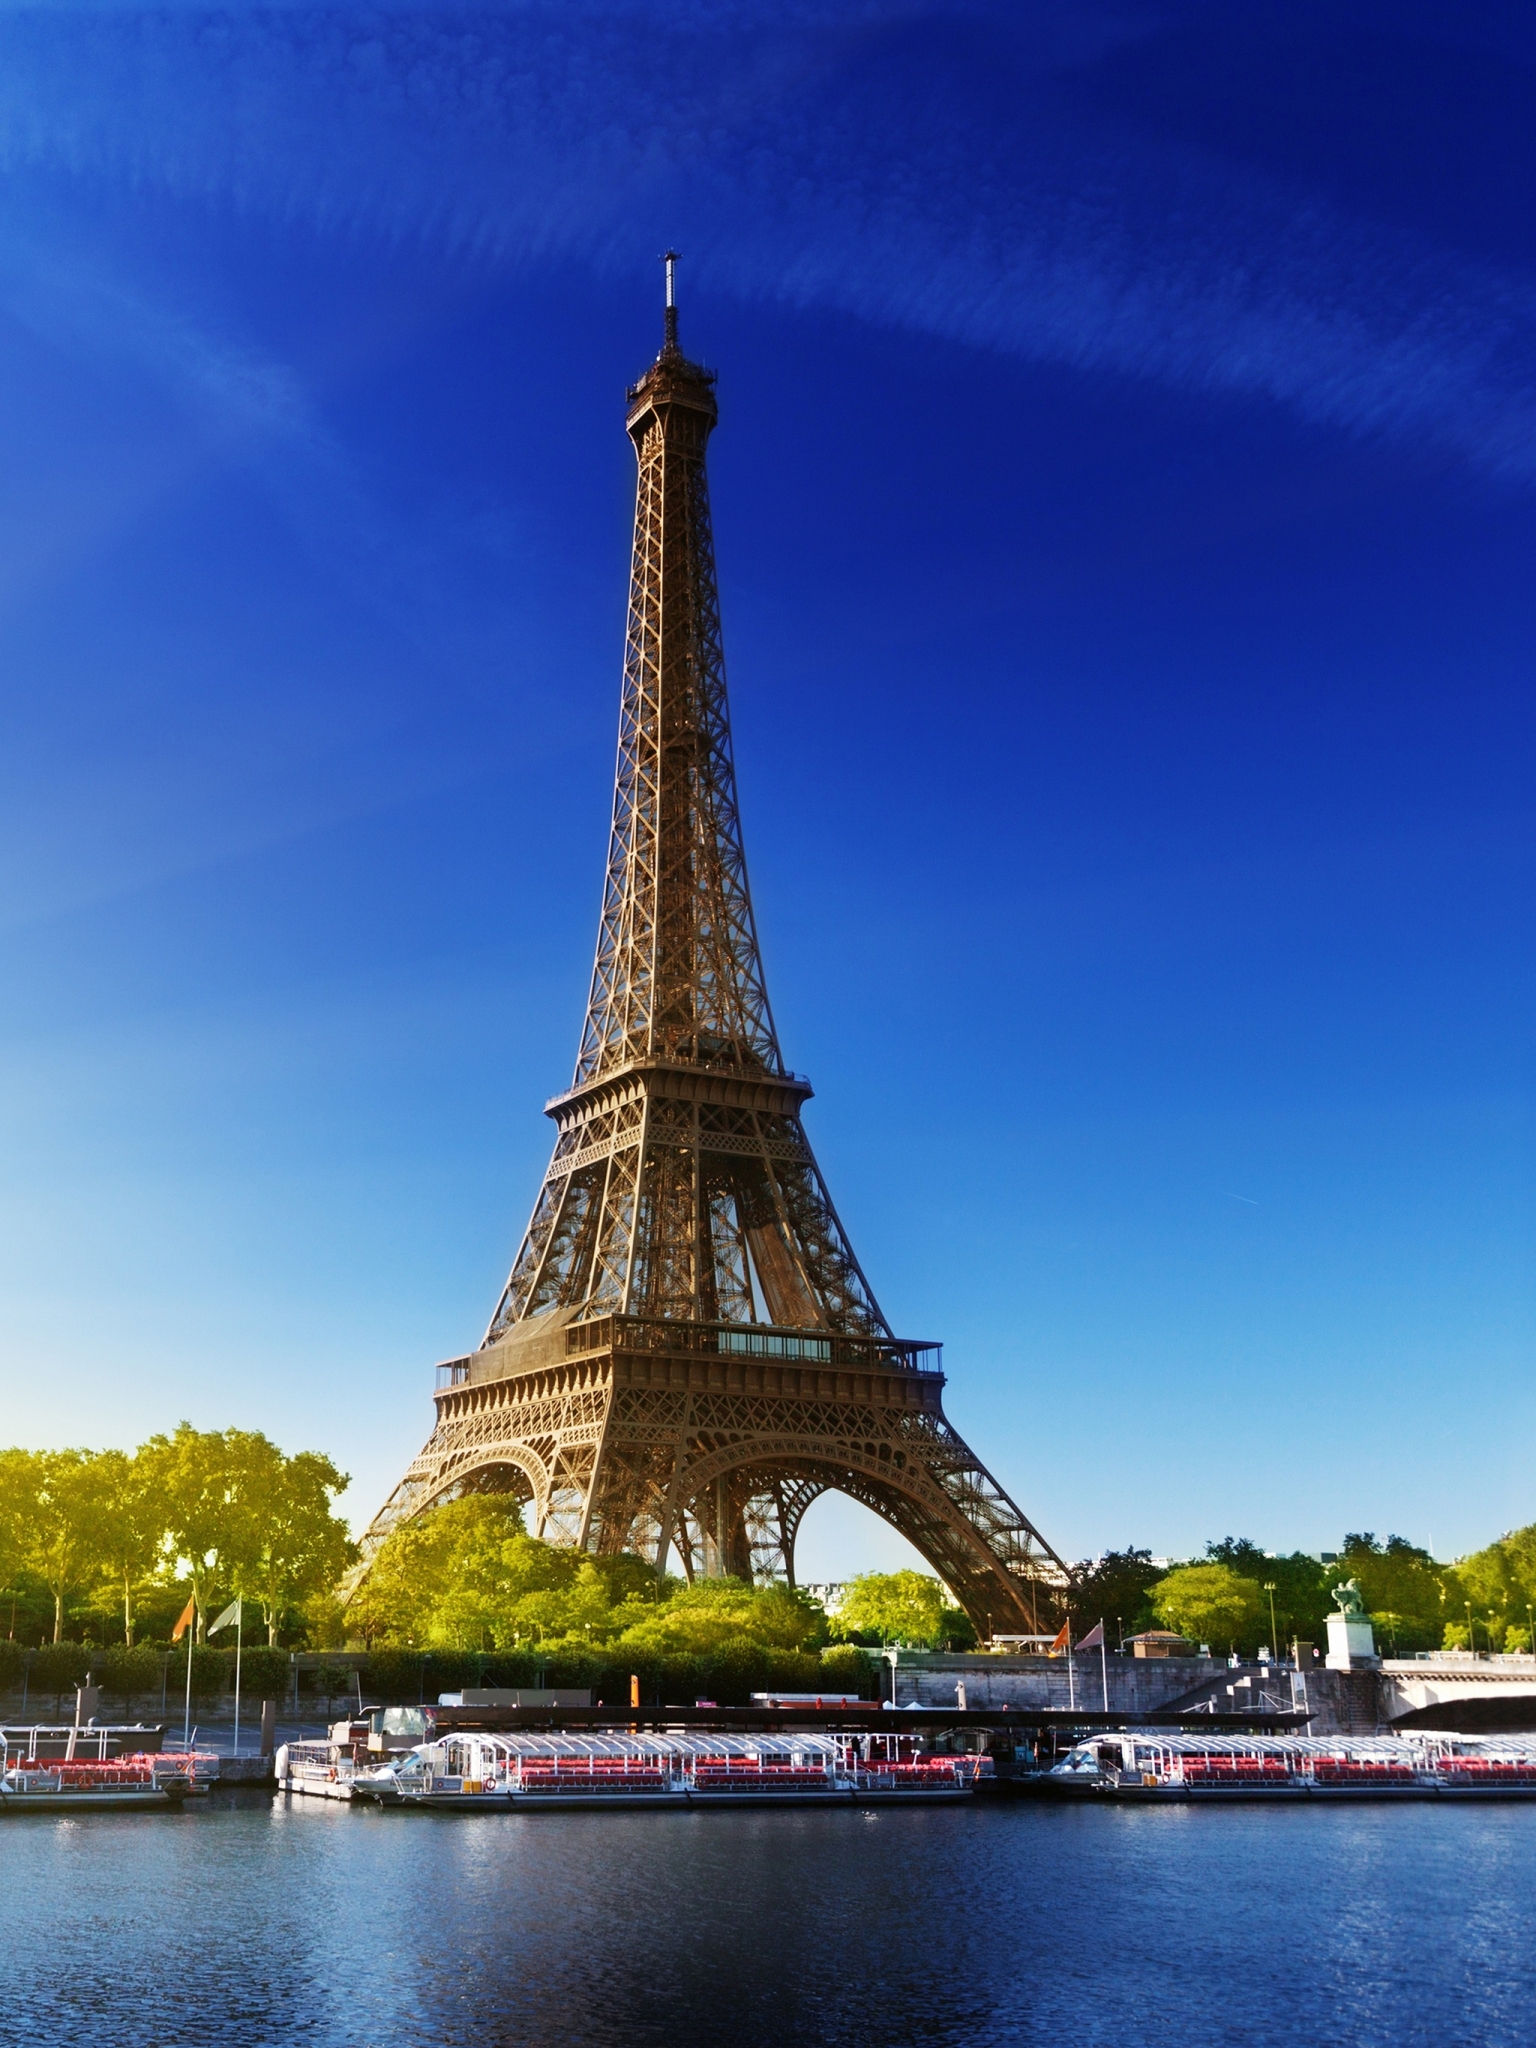 Eiffel Tower Paris for Apple iPad Air 2 resolution